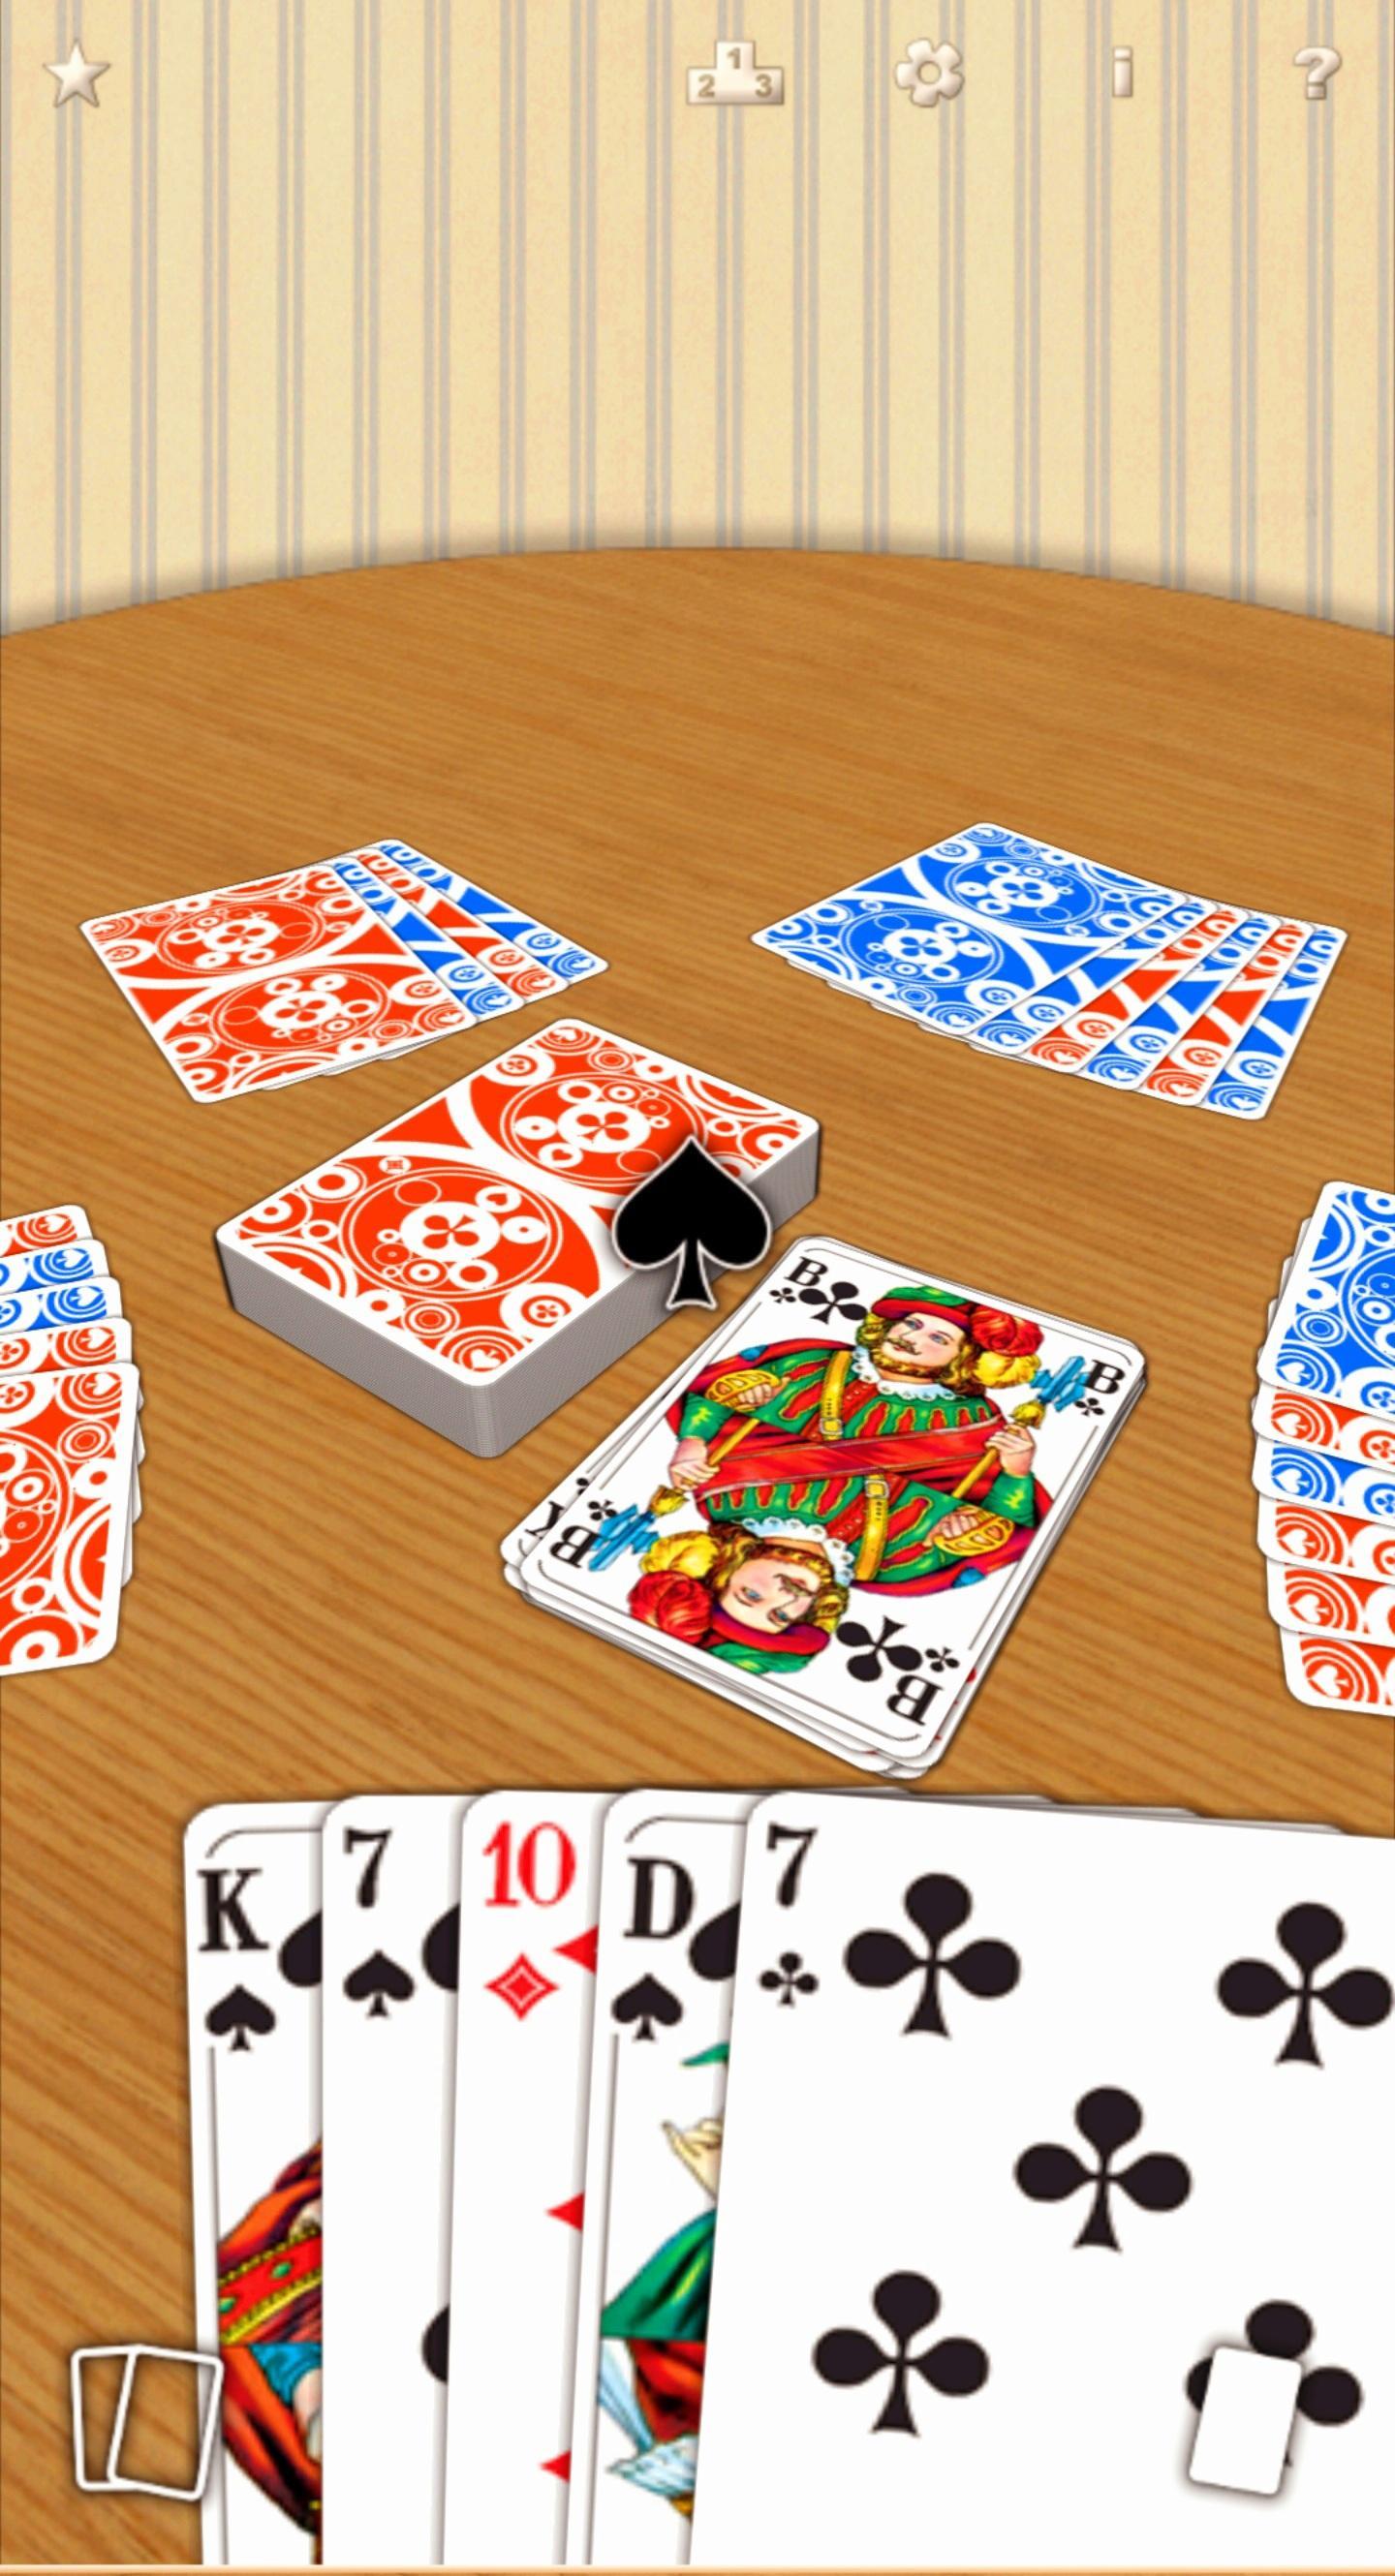 Crazy Eights free card game 1.6.96 Screenshot 11